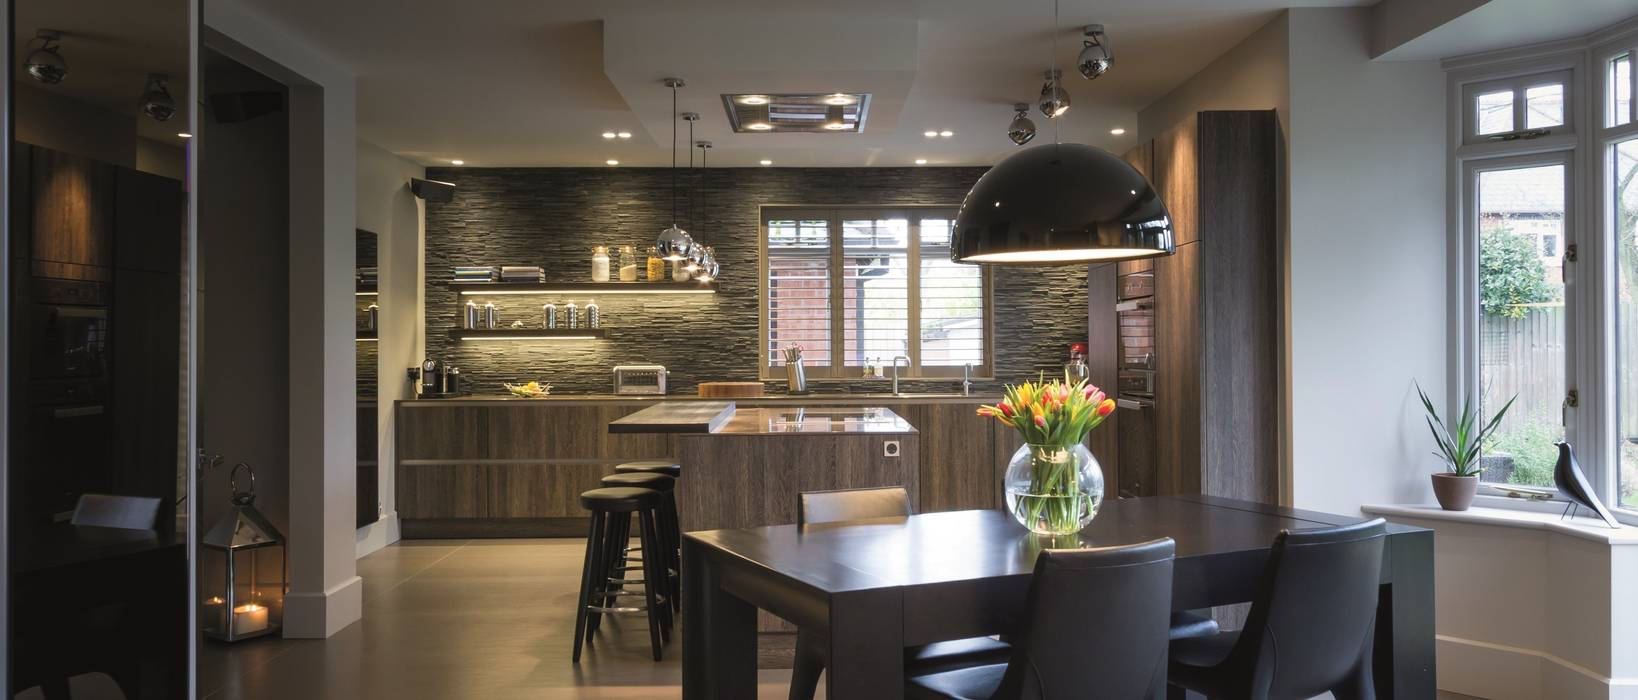 Regan Kitchen - Room of the Year / Northern Design Awards 2014, Stuart Frazer Stuart Frazer Minimalist kitchen